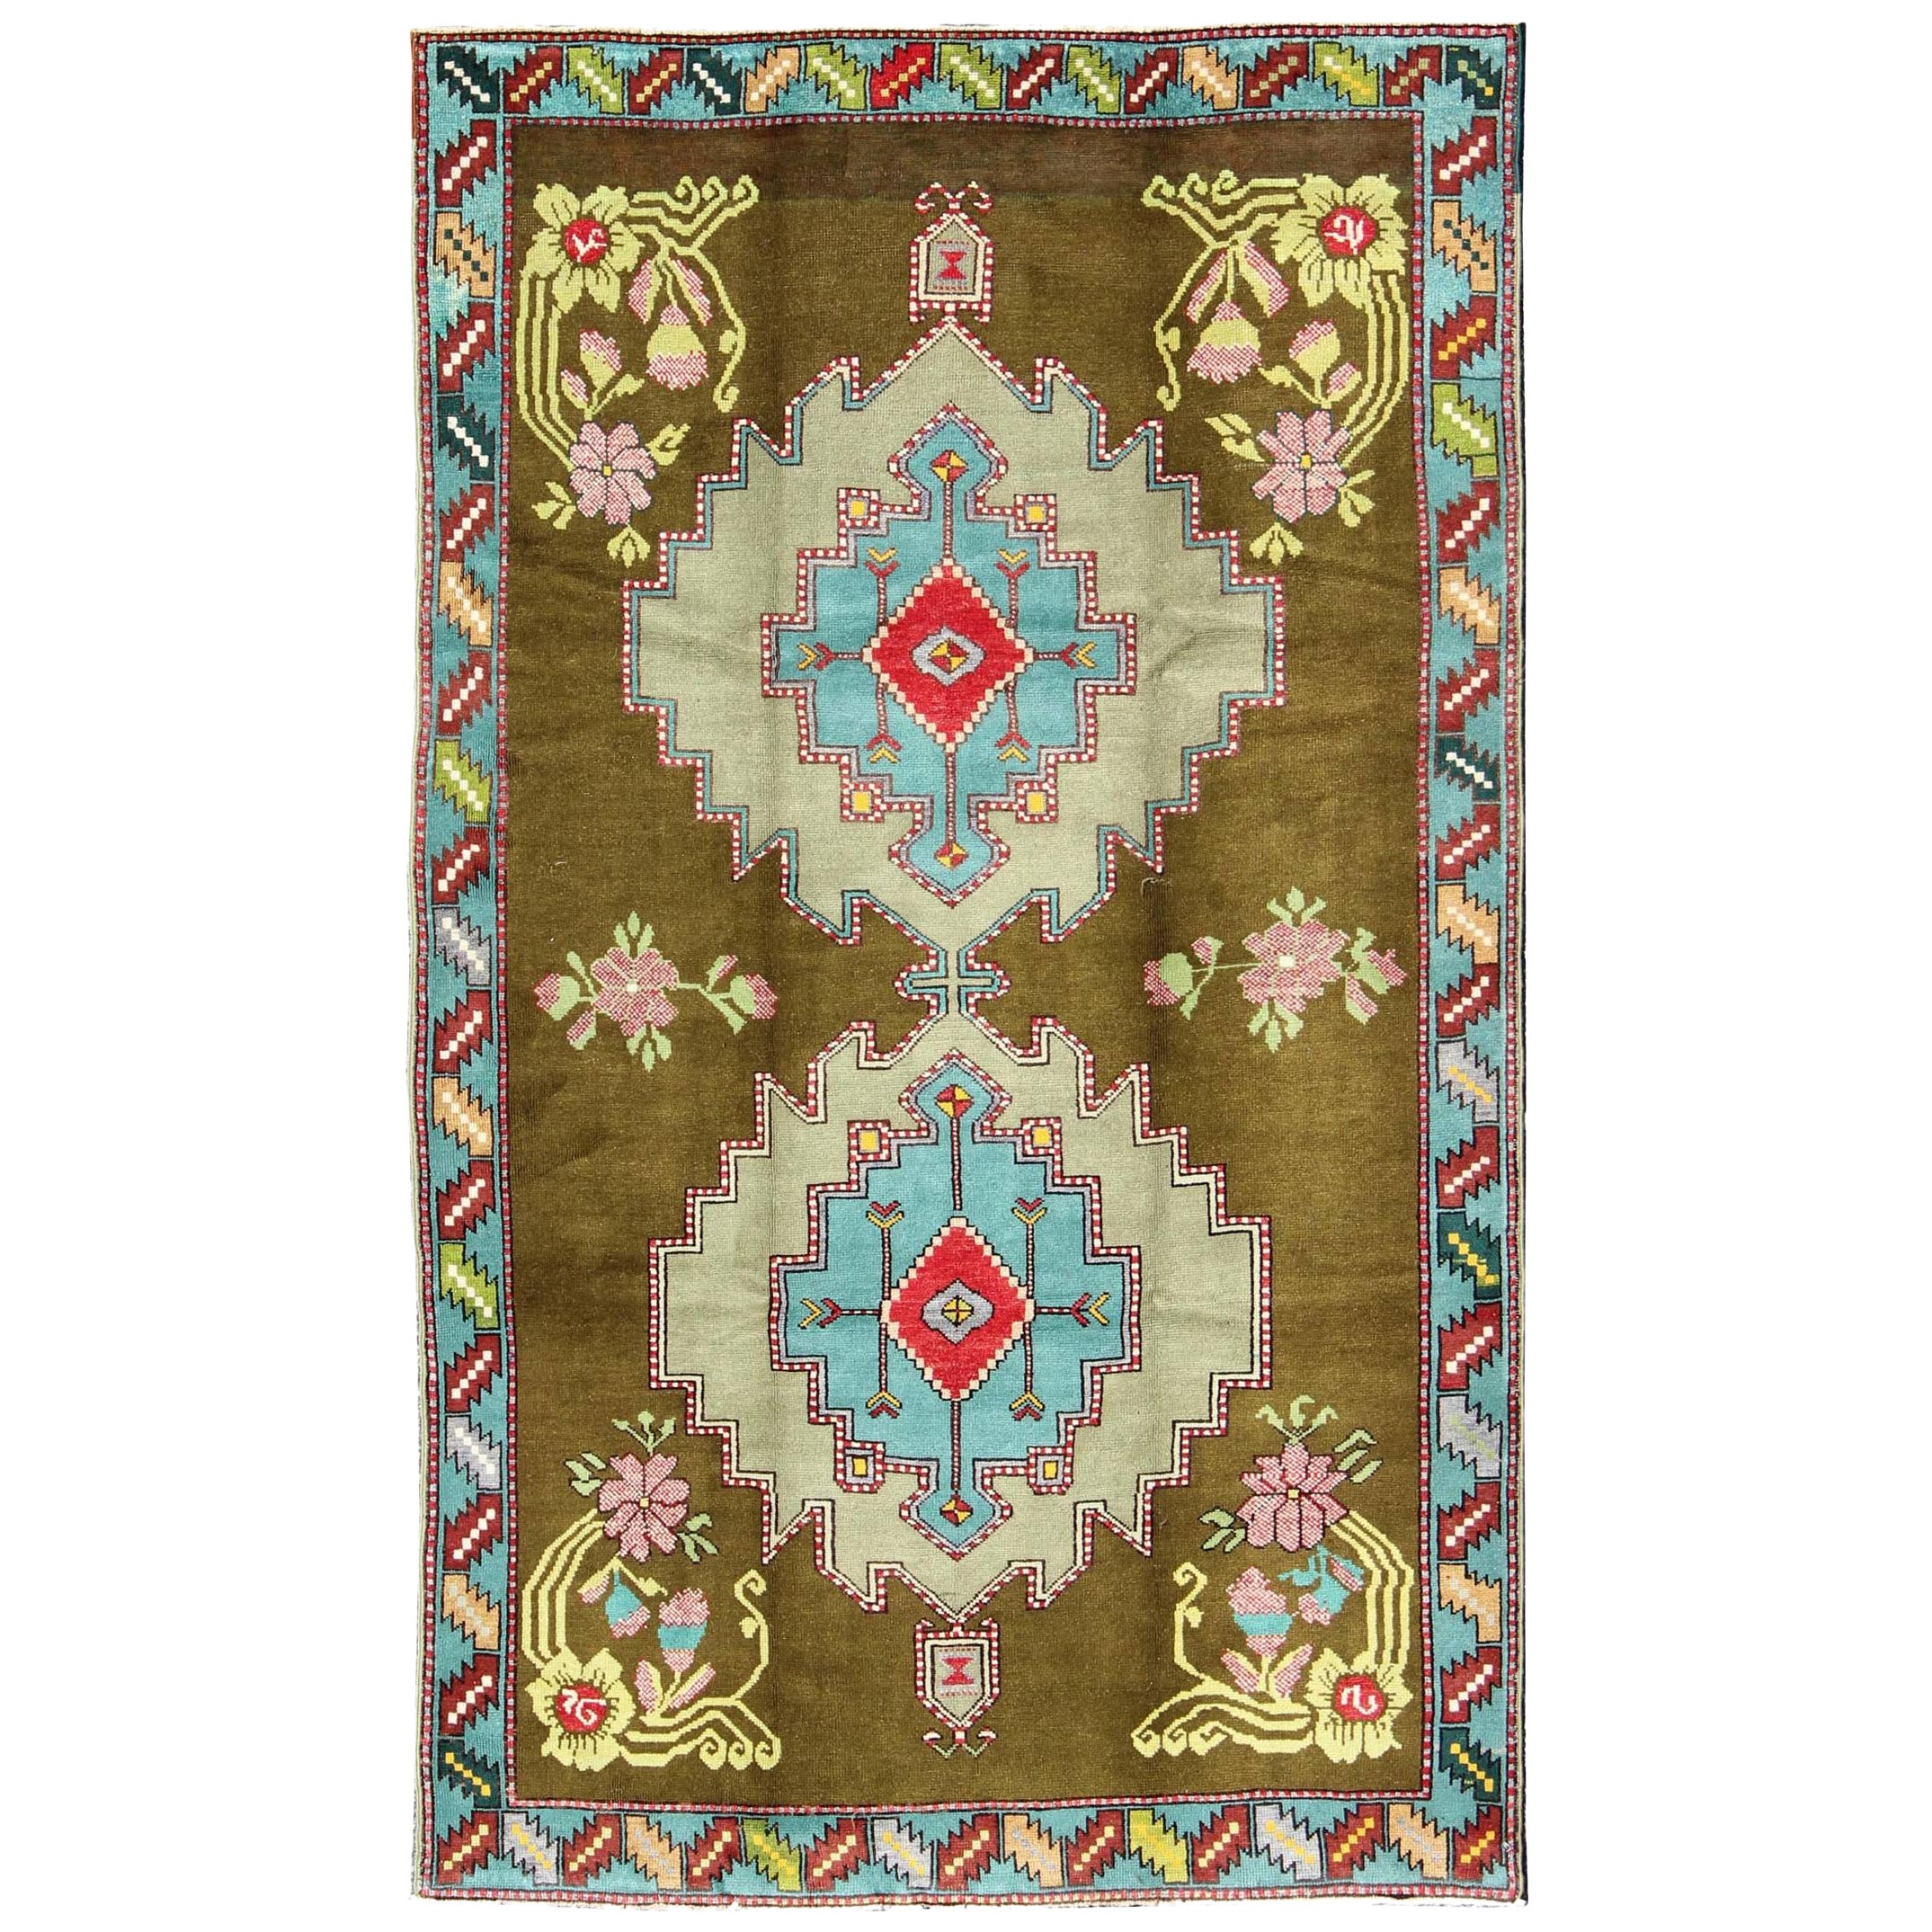 Bright Vintage Turkish Carpet in Green and Unique Vivid Colors & Design For Sale